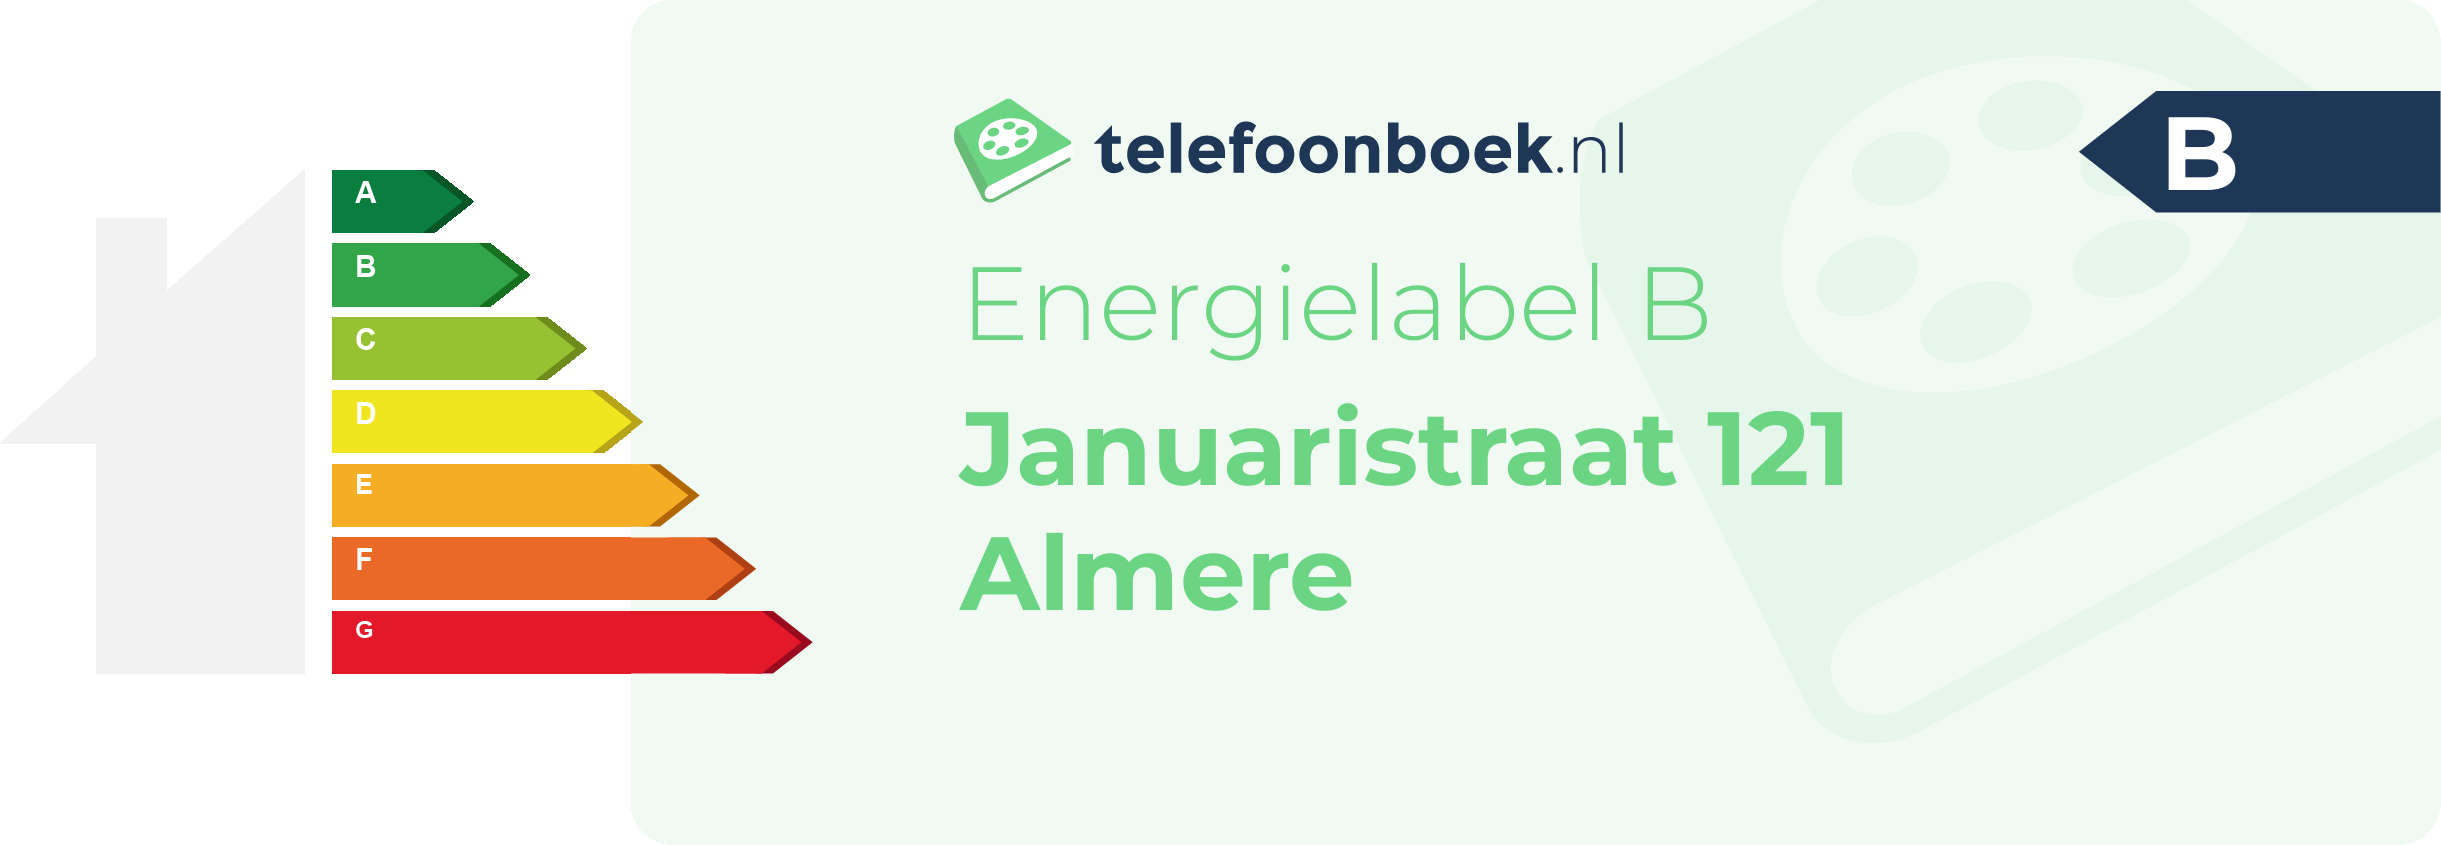 Energielabel Januaristraat 121 Almere